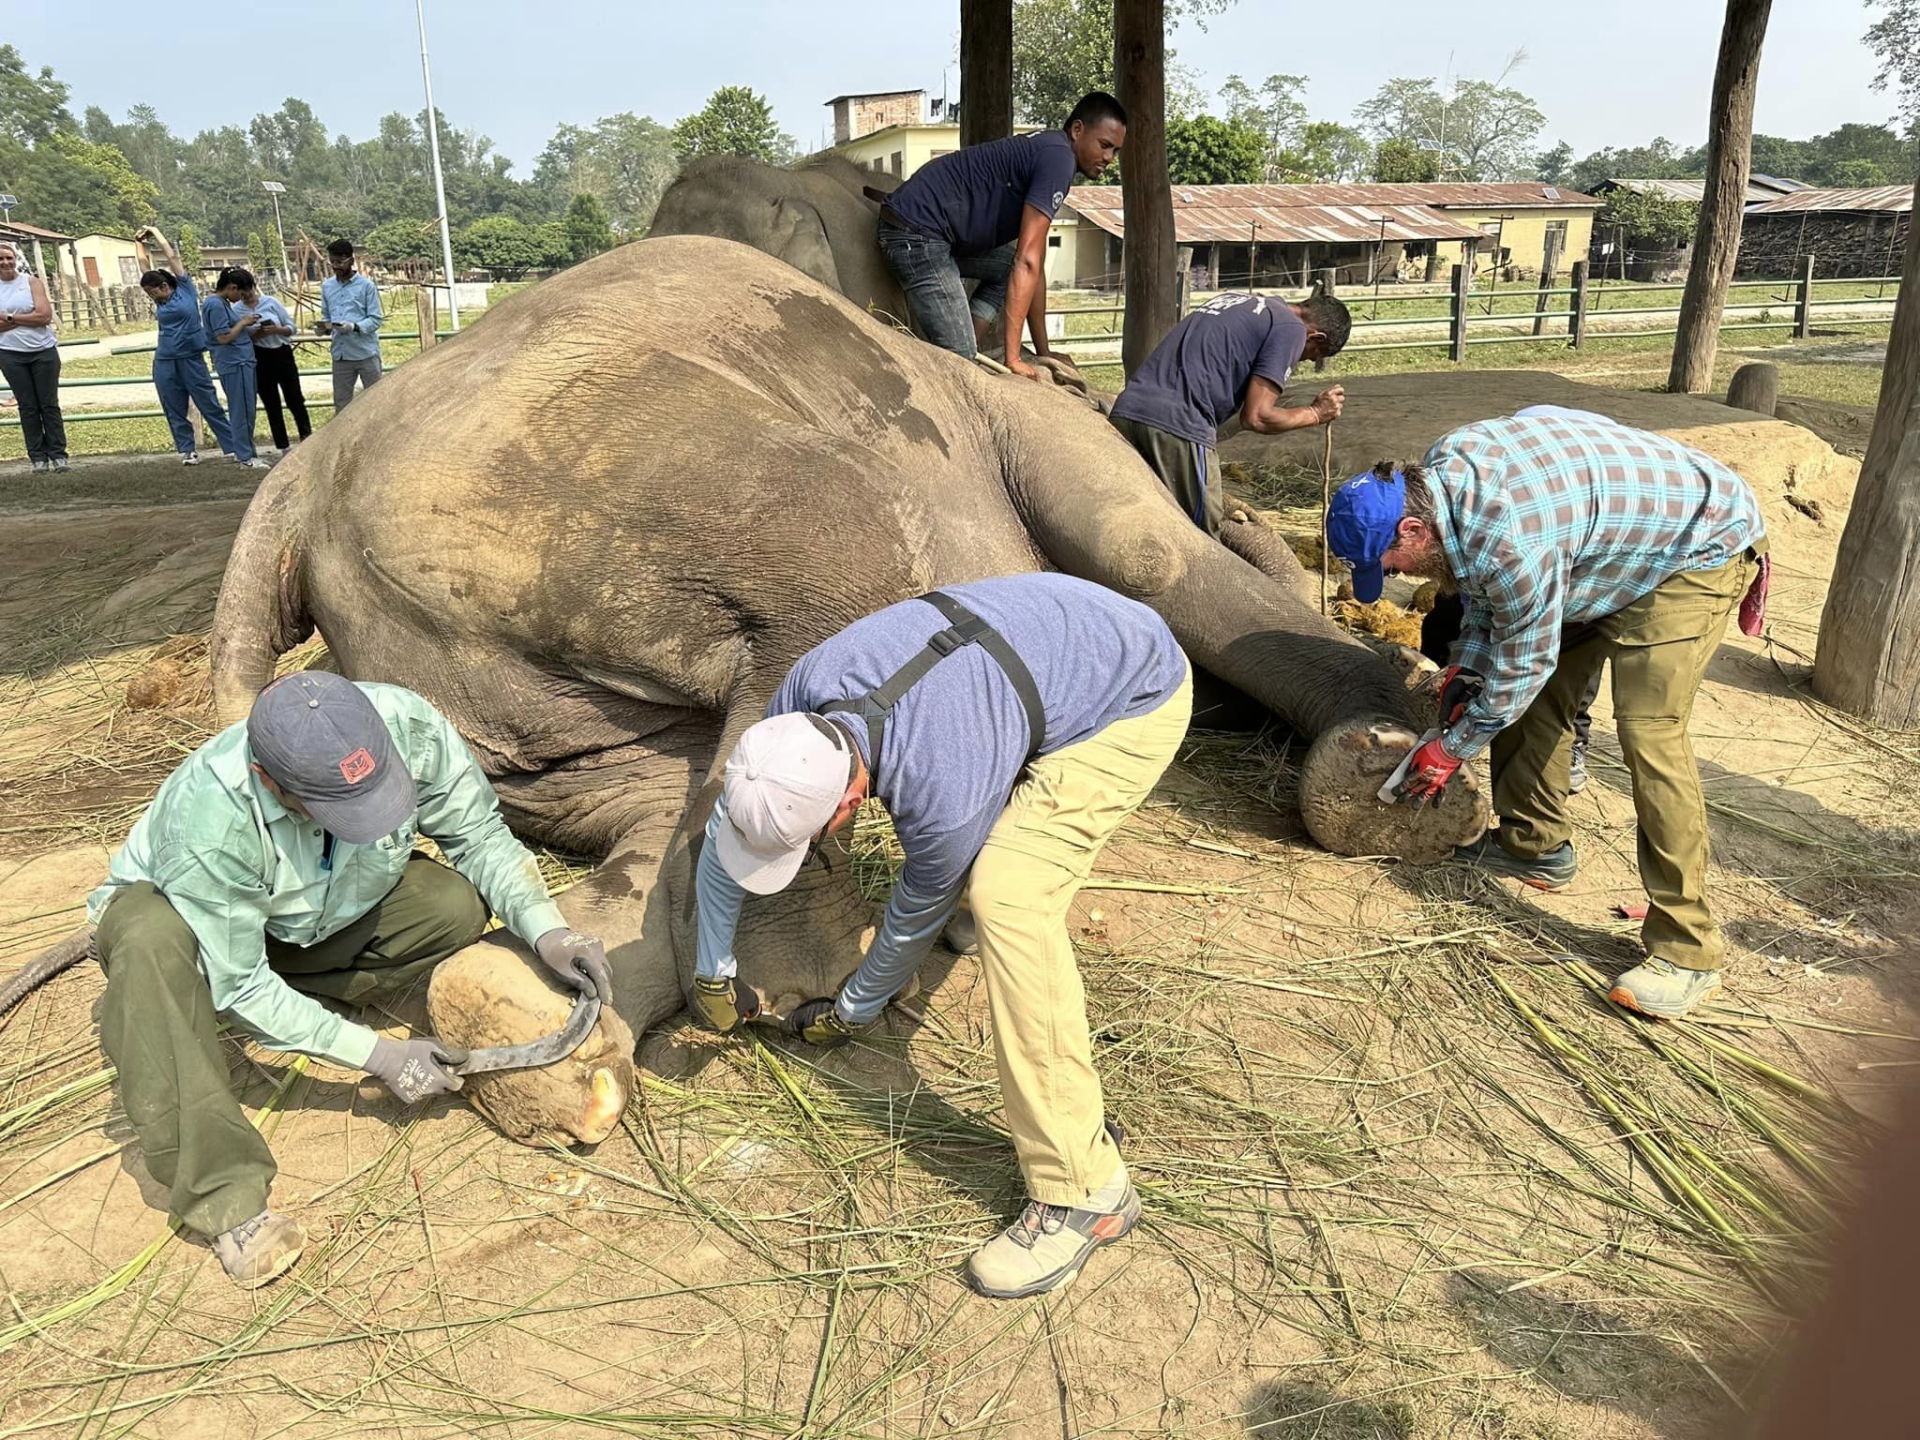 elephant keepers treating an Asian elephant's foot pads